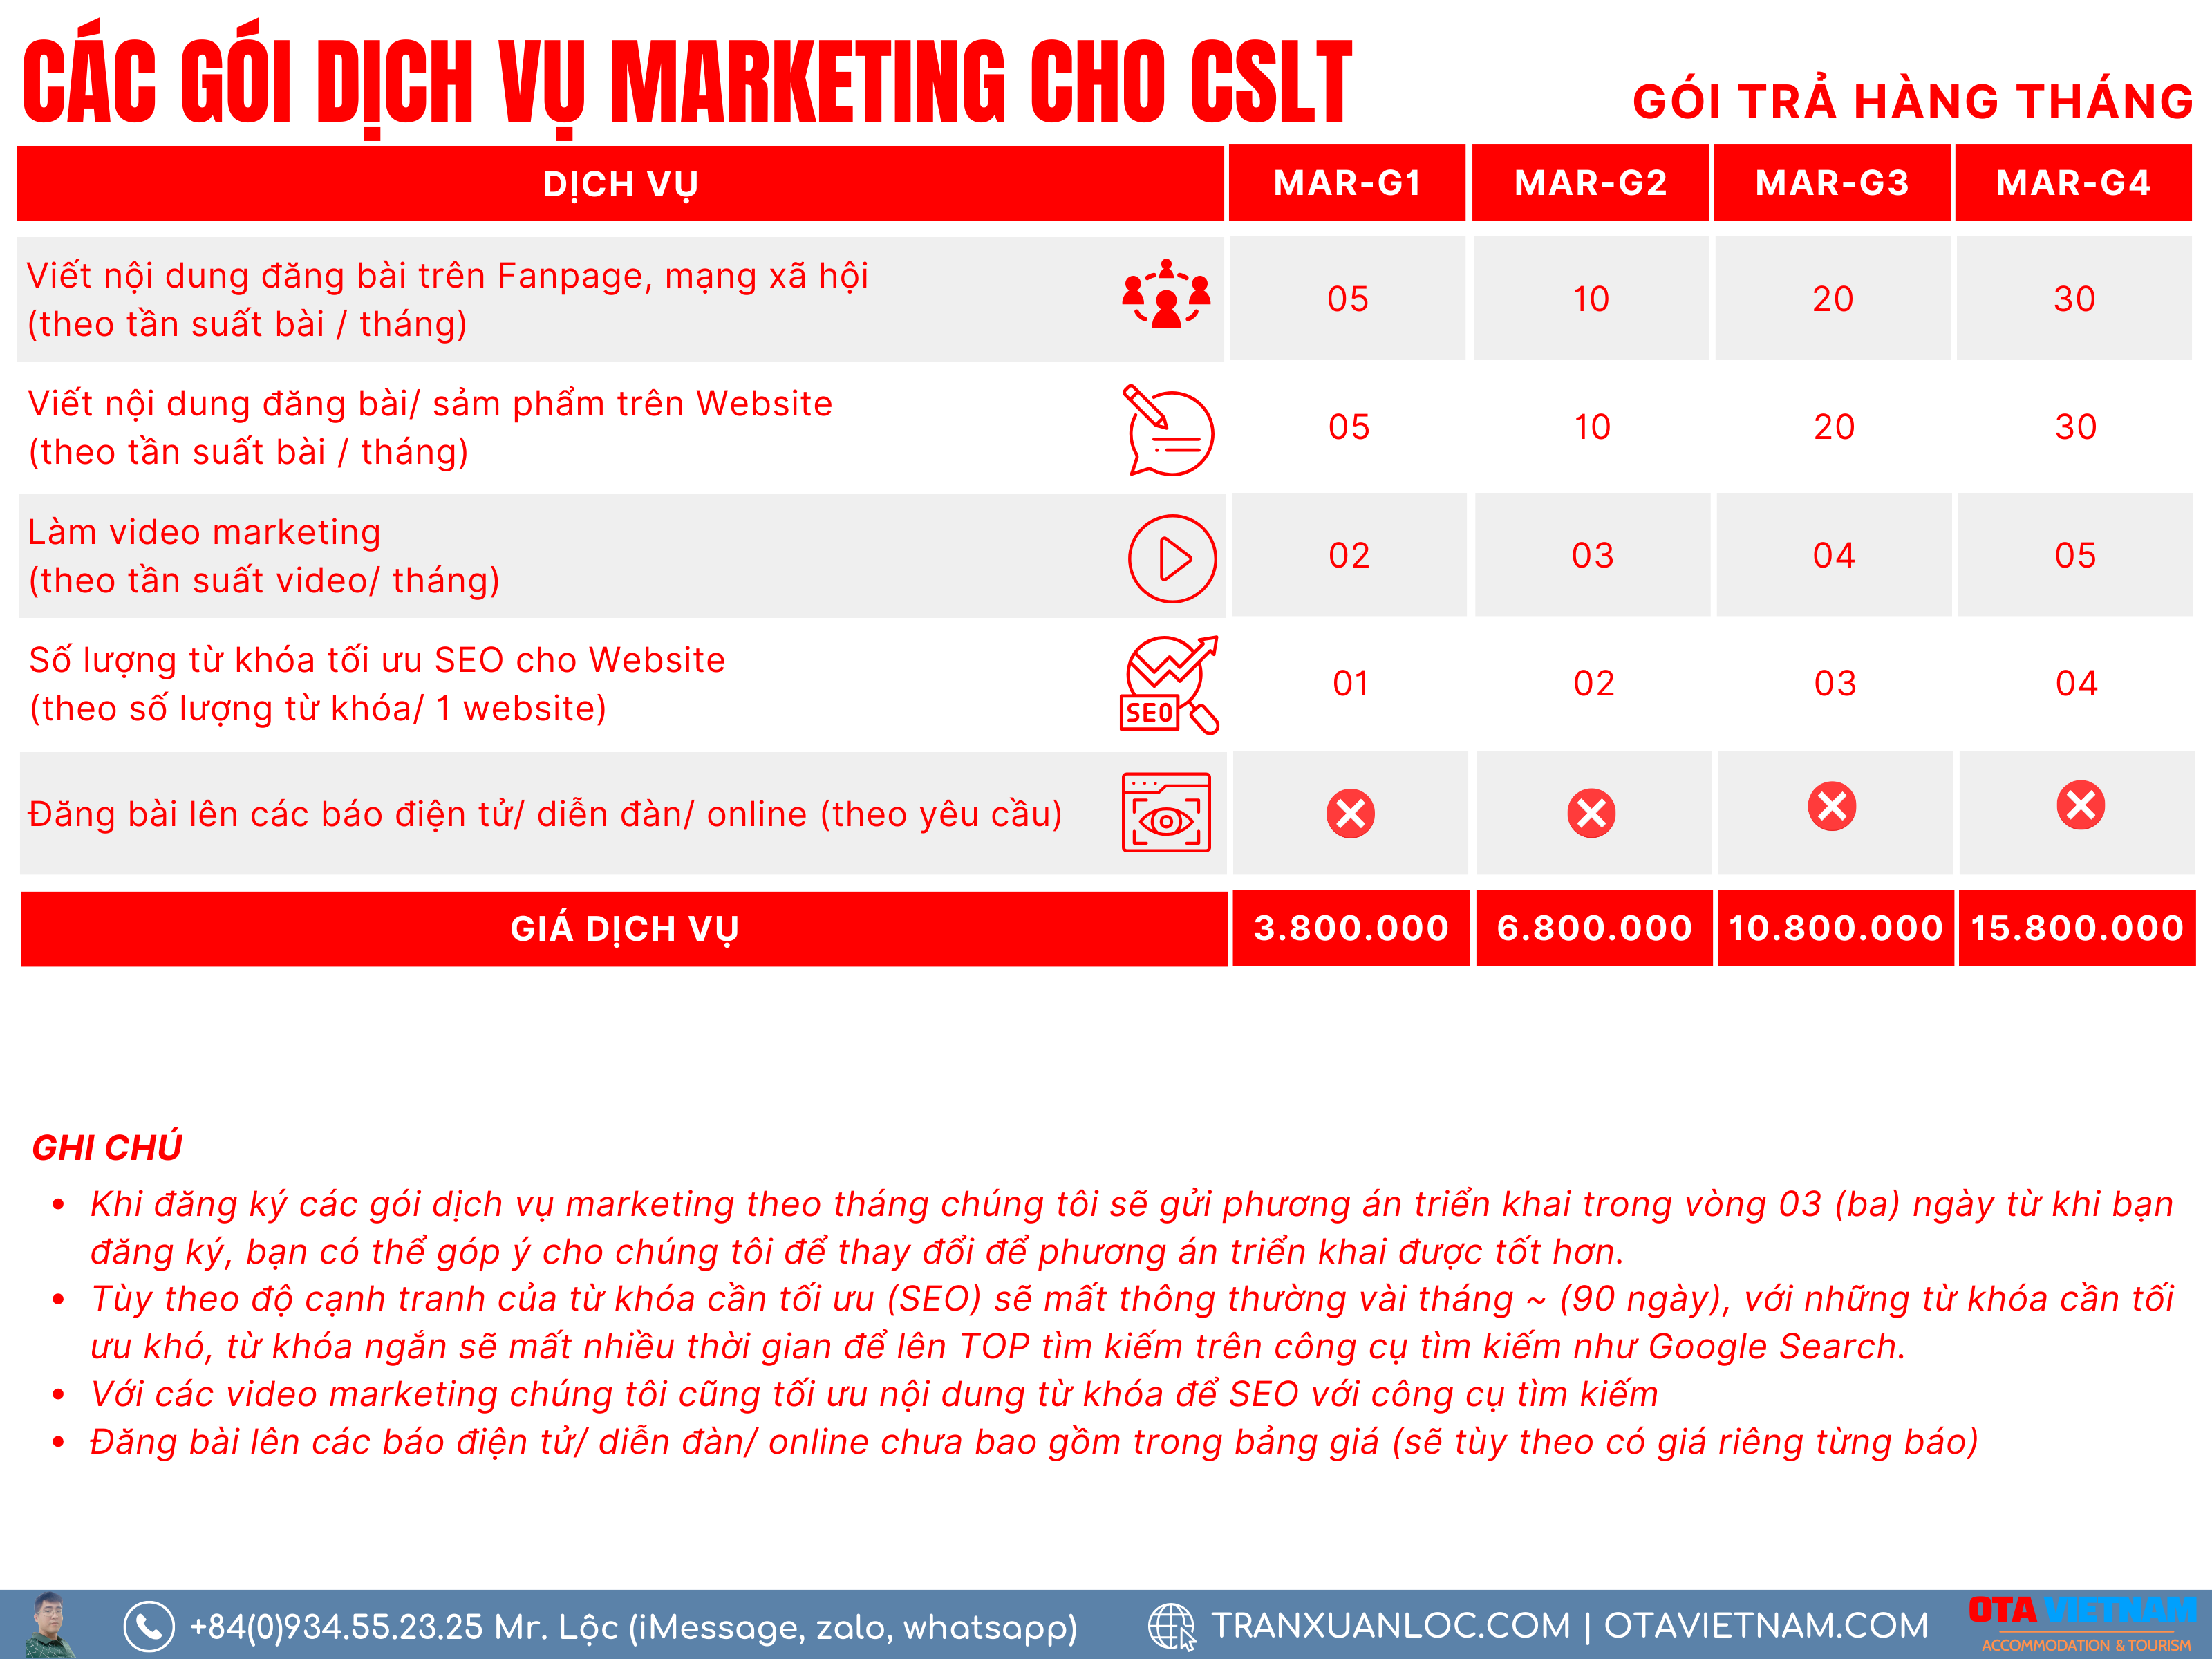 Otavn Txl Goi Dich Vu Sales Marketing Monthly Payment